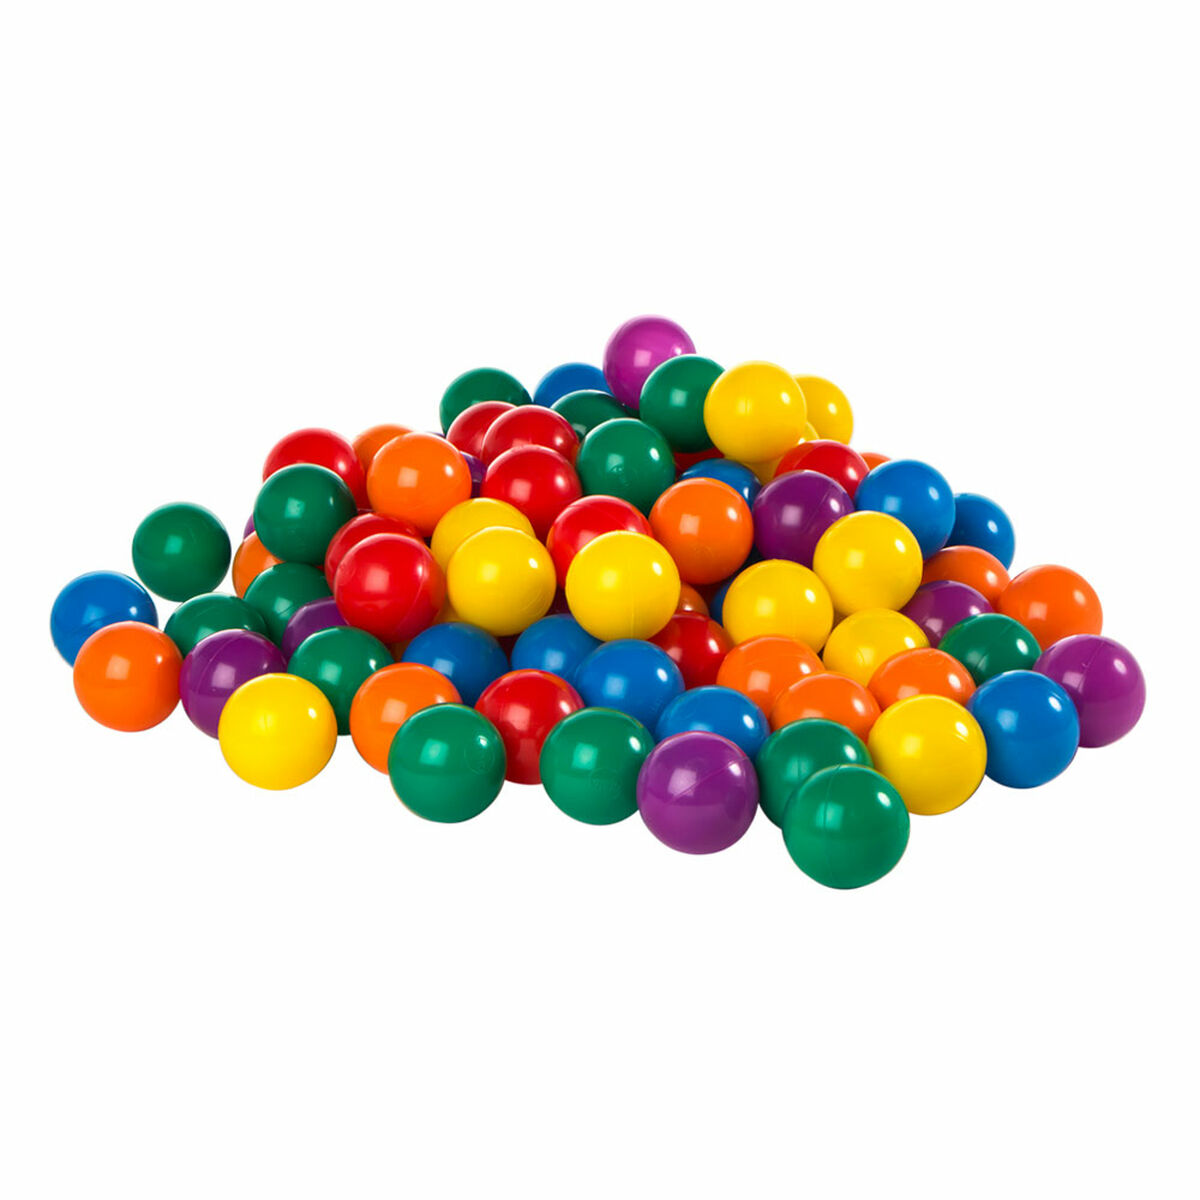 Balles   Intex Fun Ballz         100 Pièces 6,5 x 6,5 x 6,5 cm  